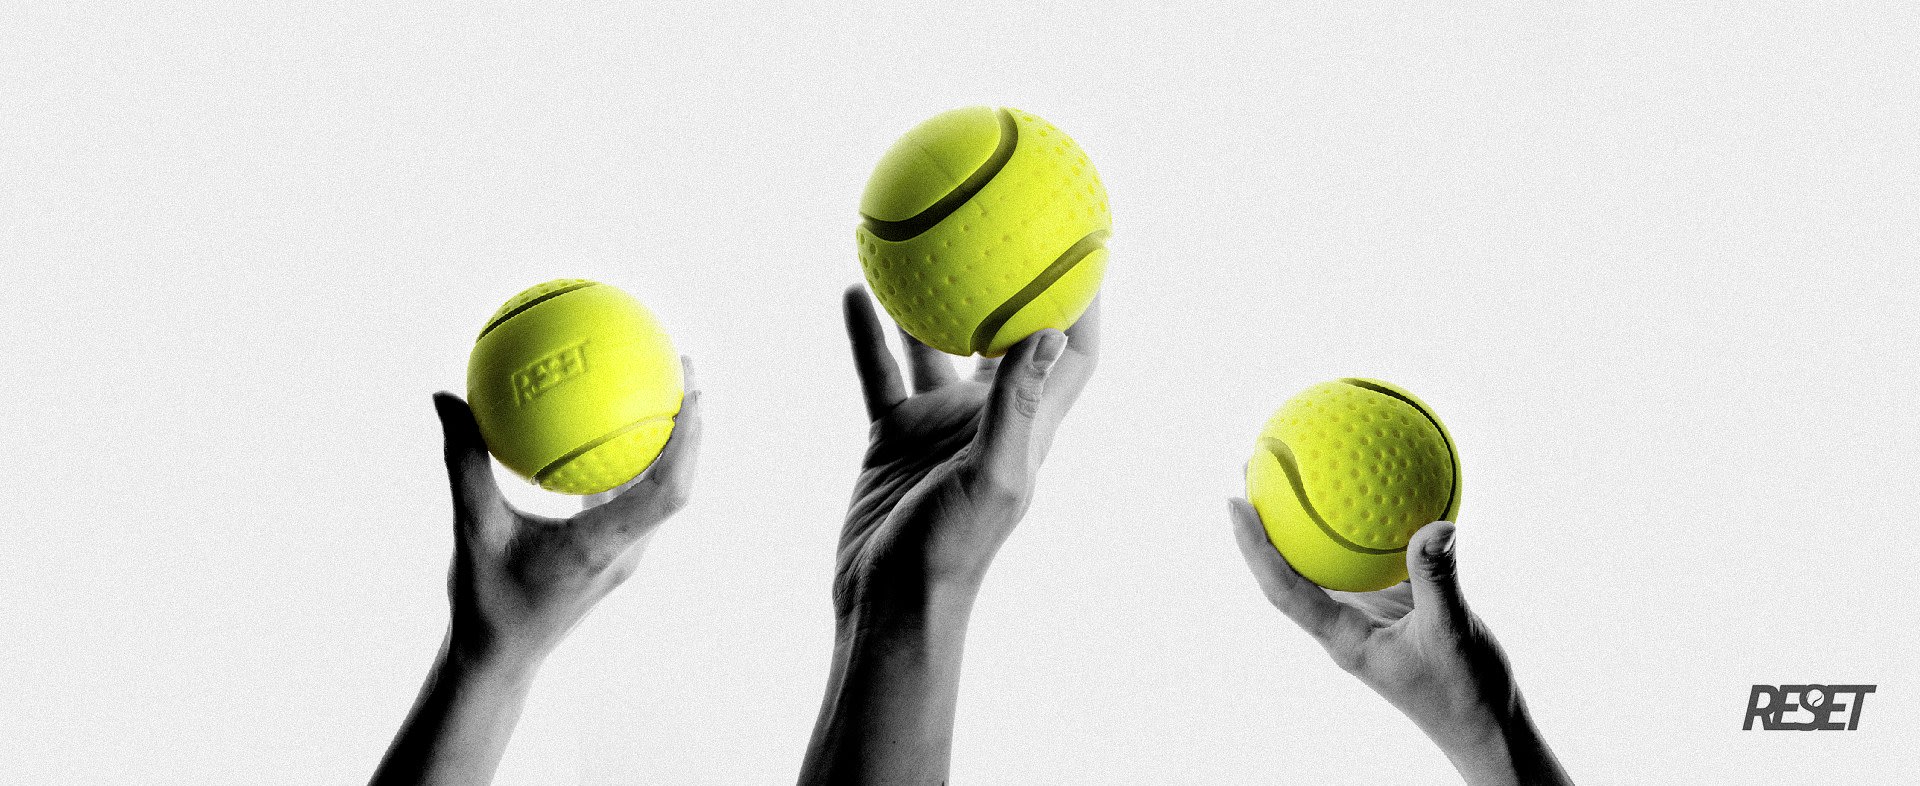 RESET_ the new VI Tennis Ball